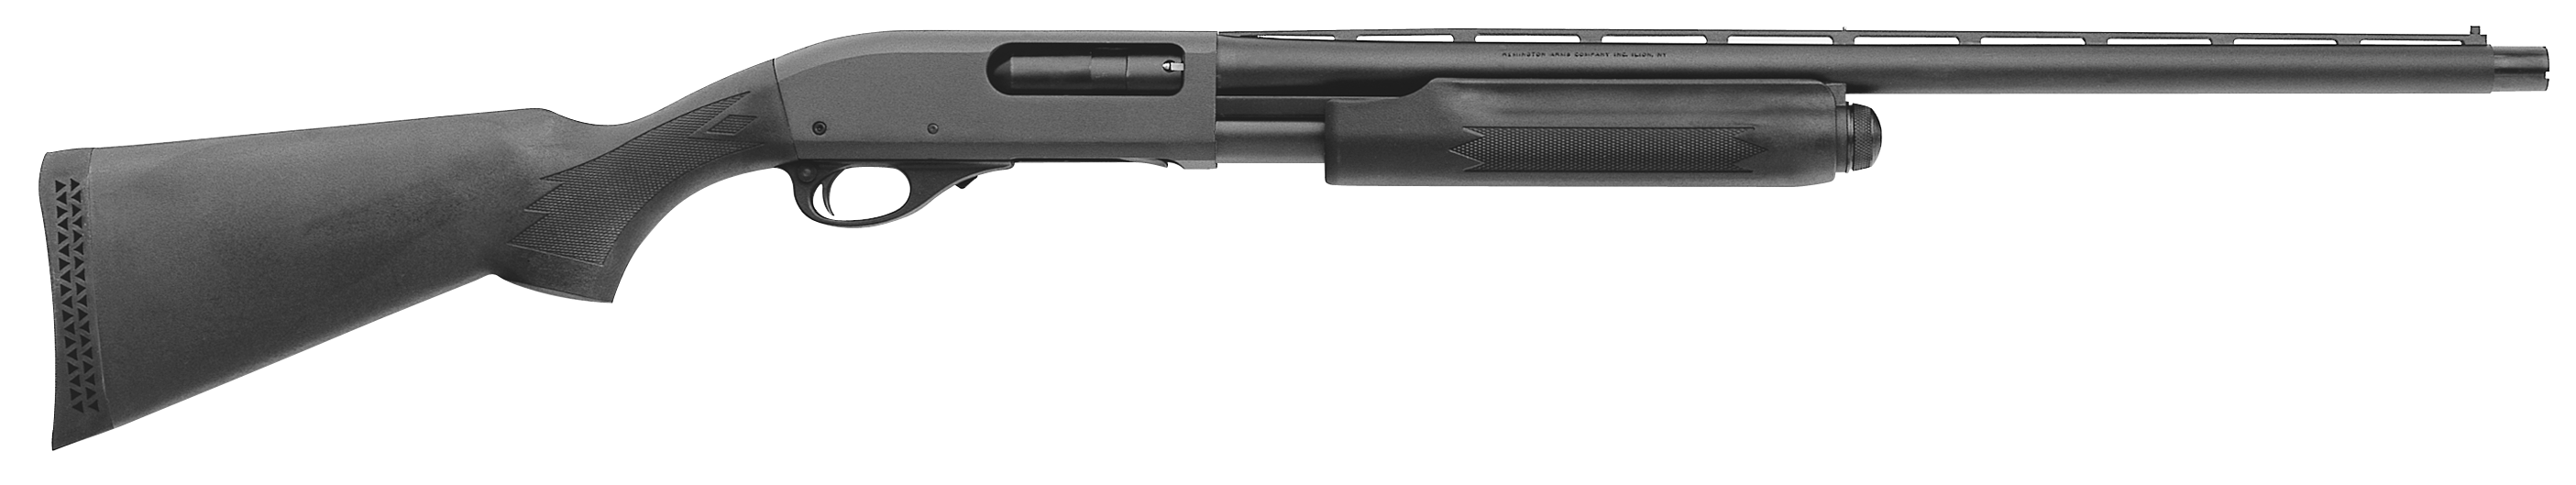 Model 870 Express Super Magnum Turkey